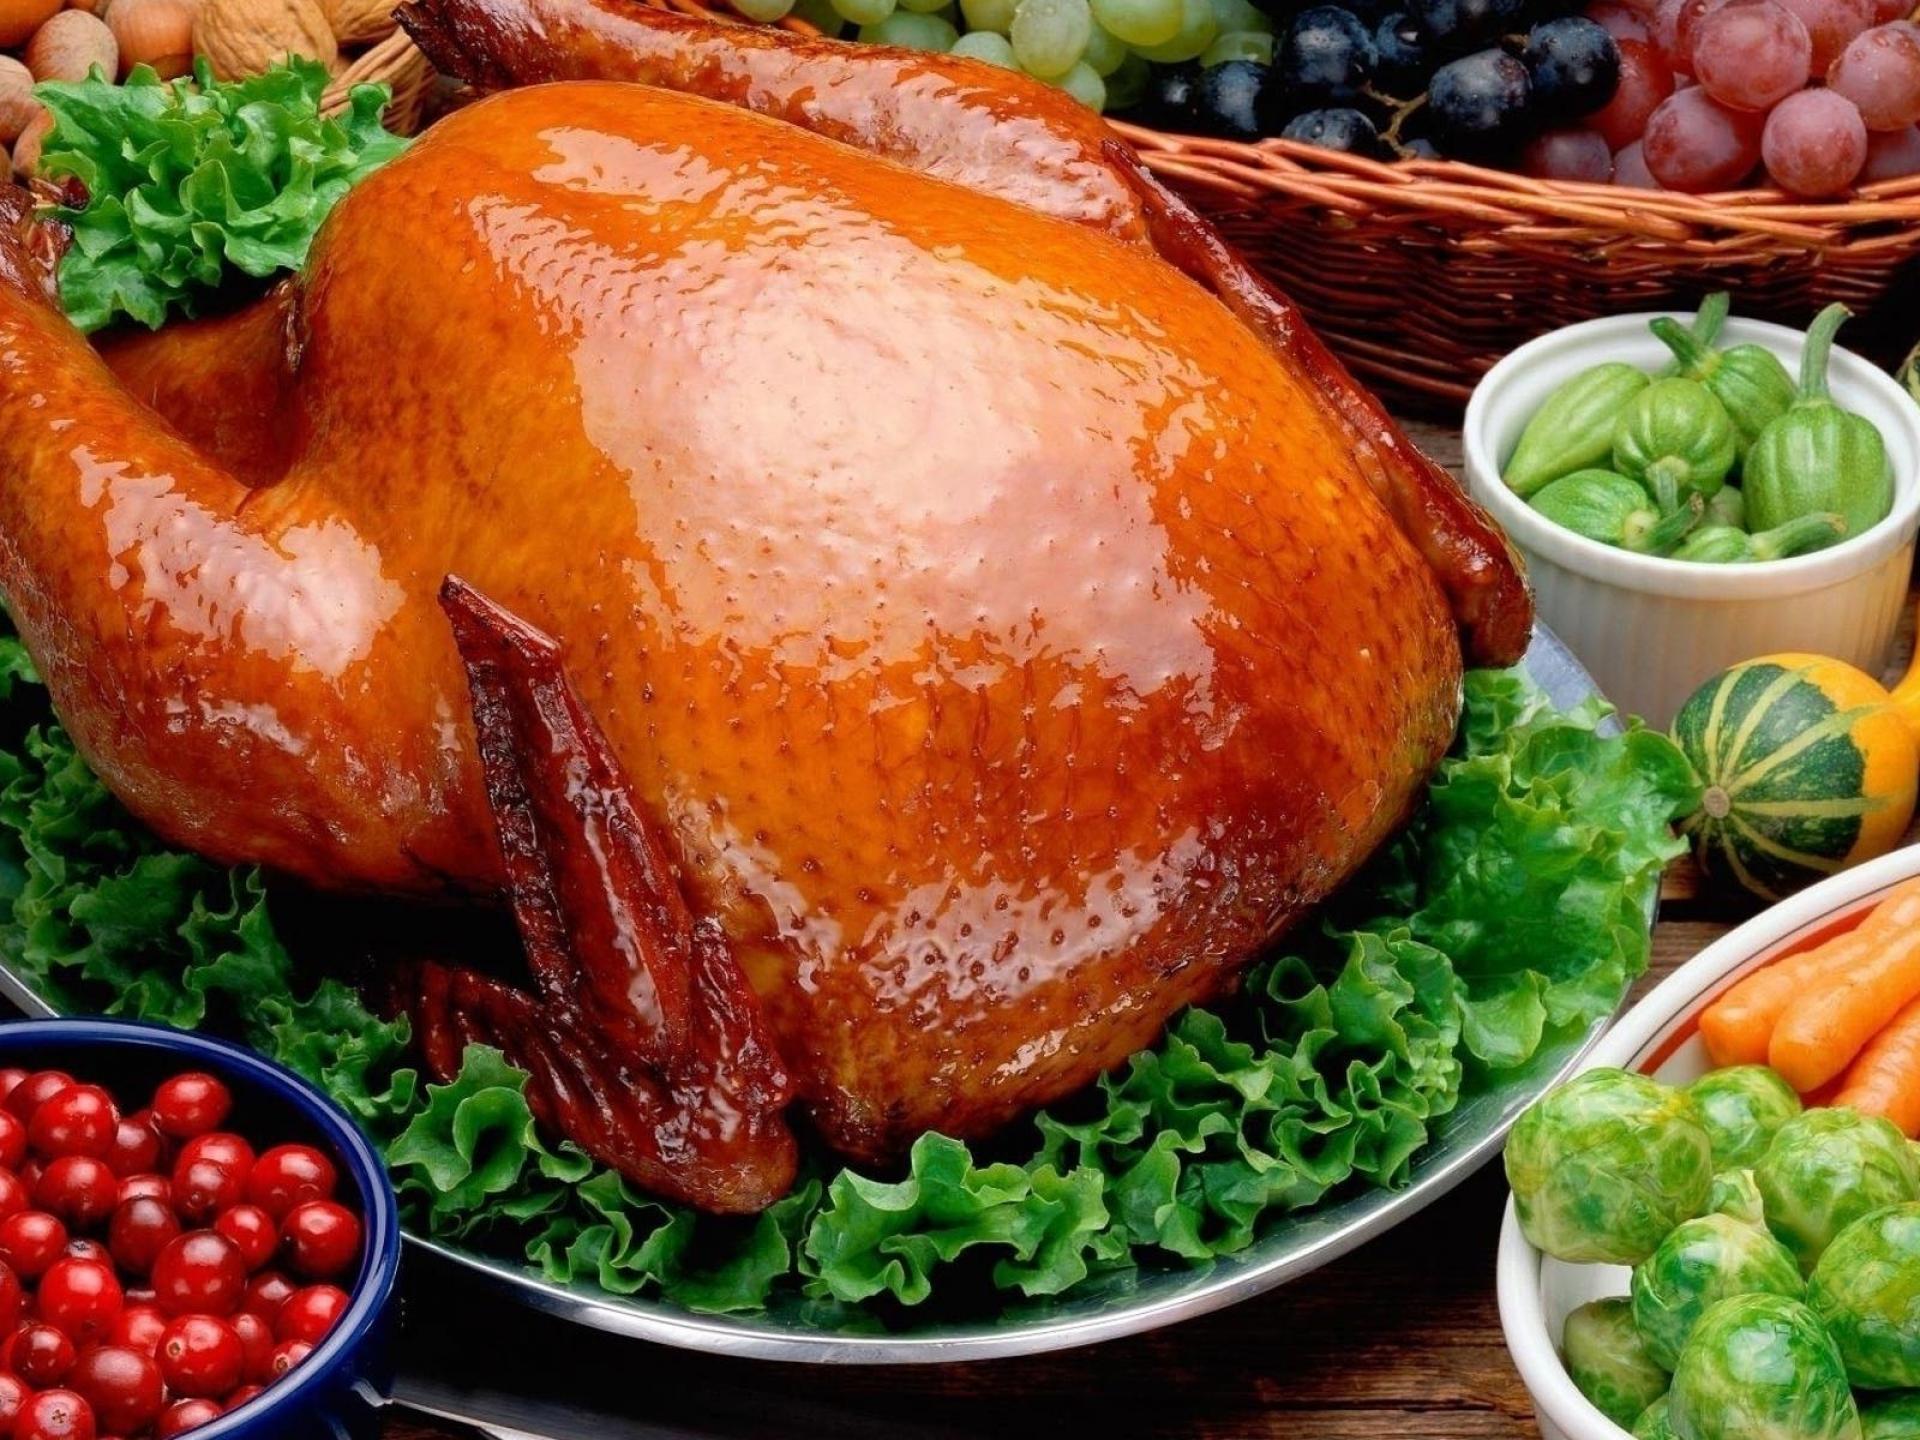 Food, Grapes, Carrots, Thanksgiving, Turkey Bird, Cranberries Food